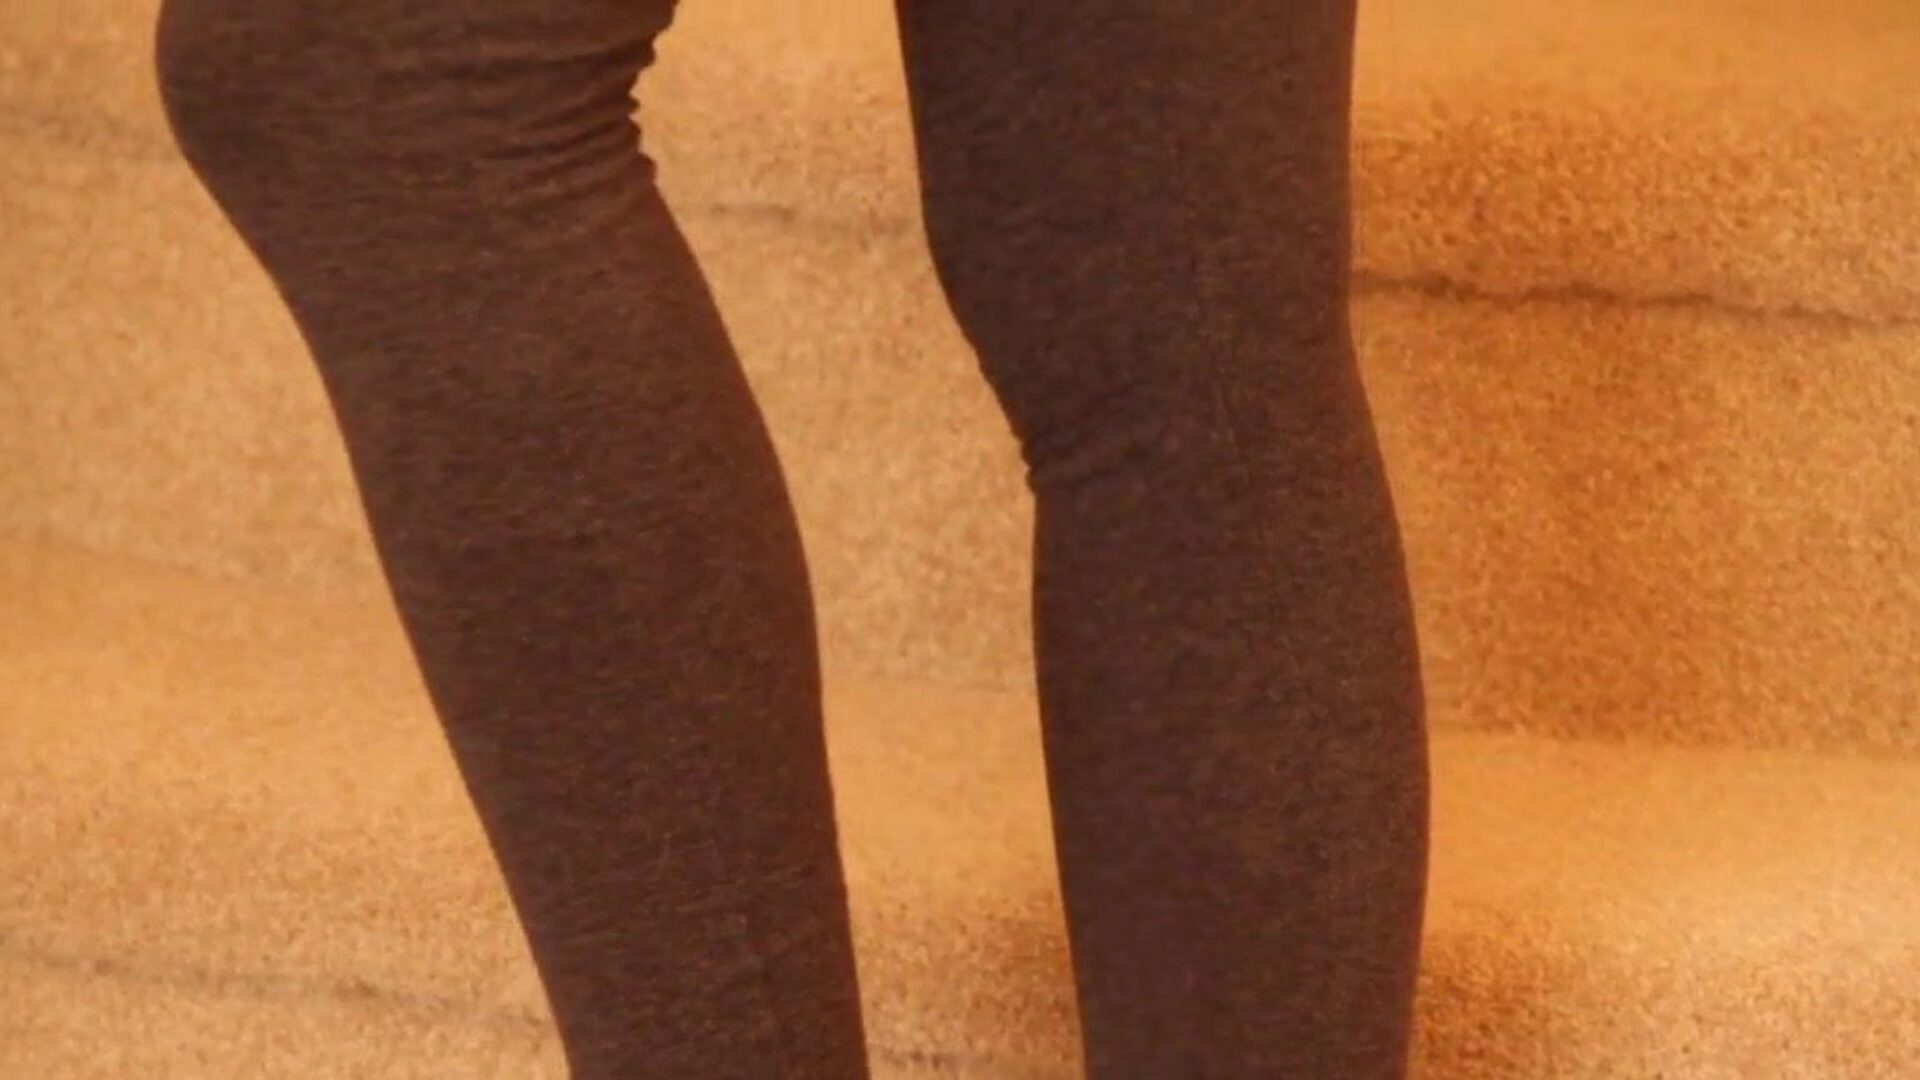 Rachel Williams Grey Leggings